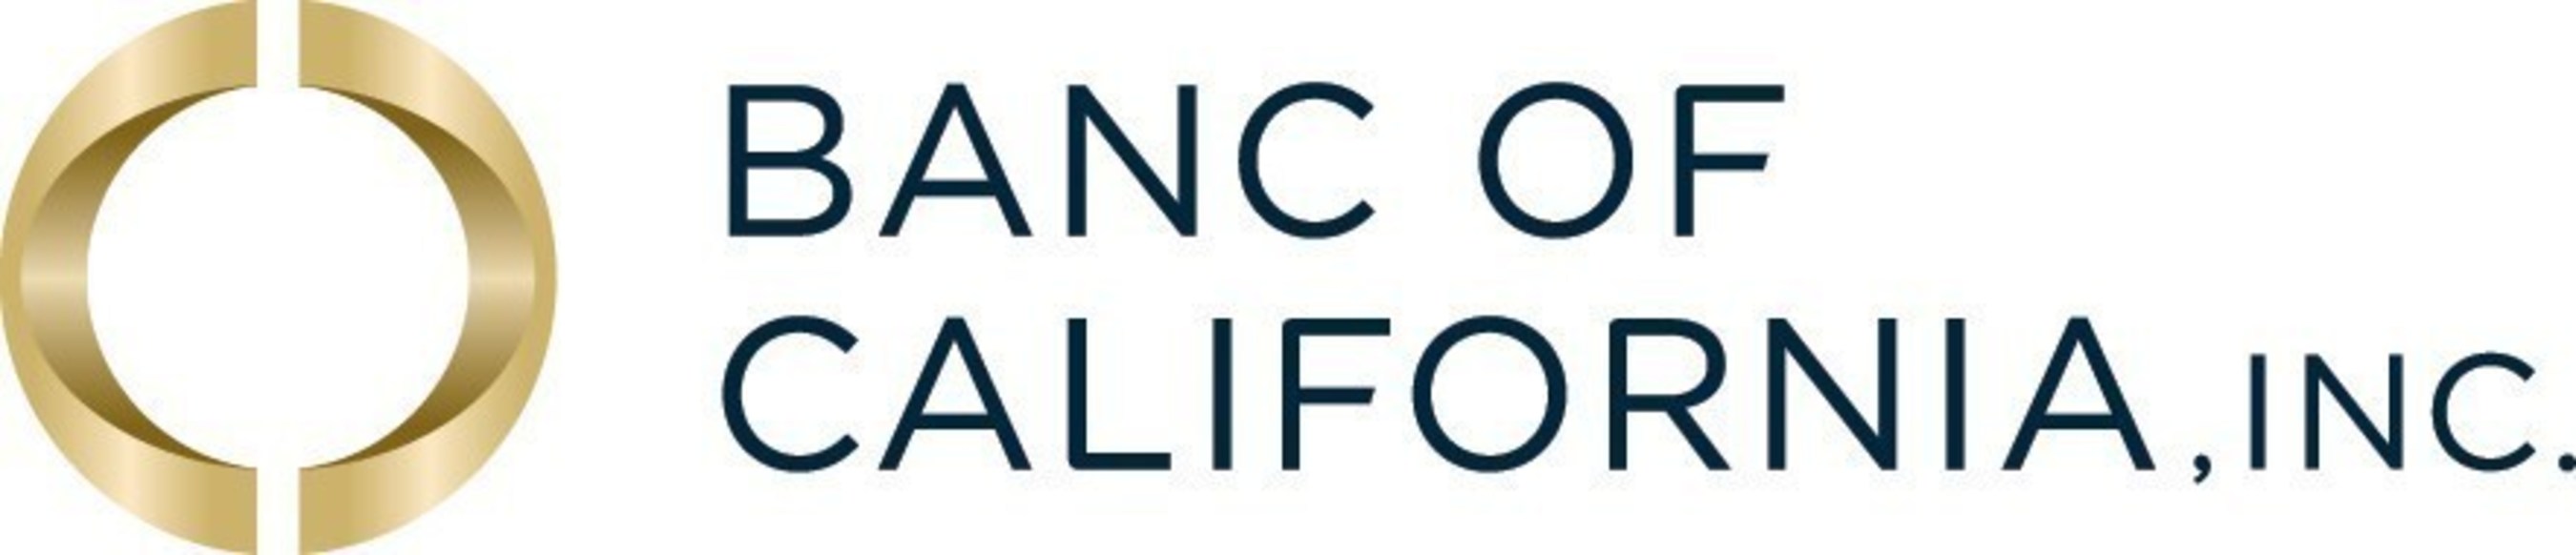 Banc of California Logo.